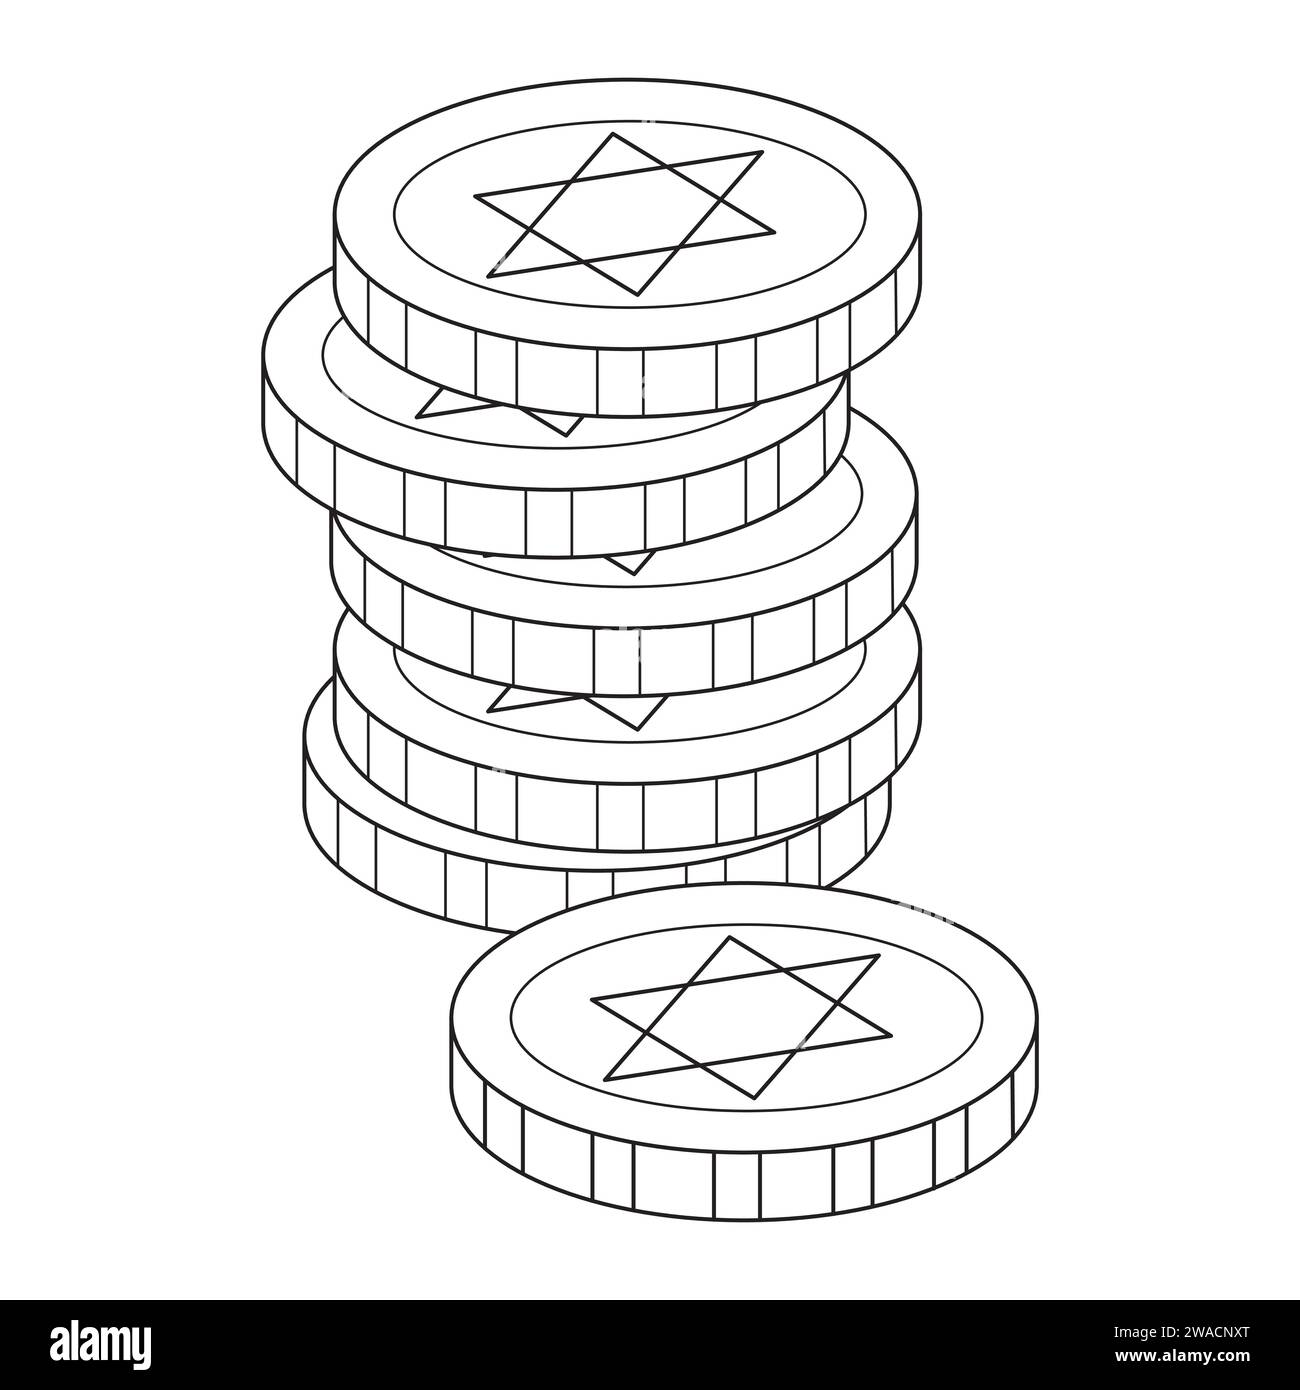 Coins, Jewish coins. Happy Hanukkah Illustration. Coloring page. Line Art. Stock Vector